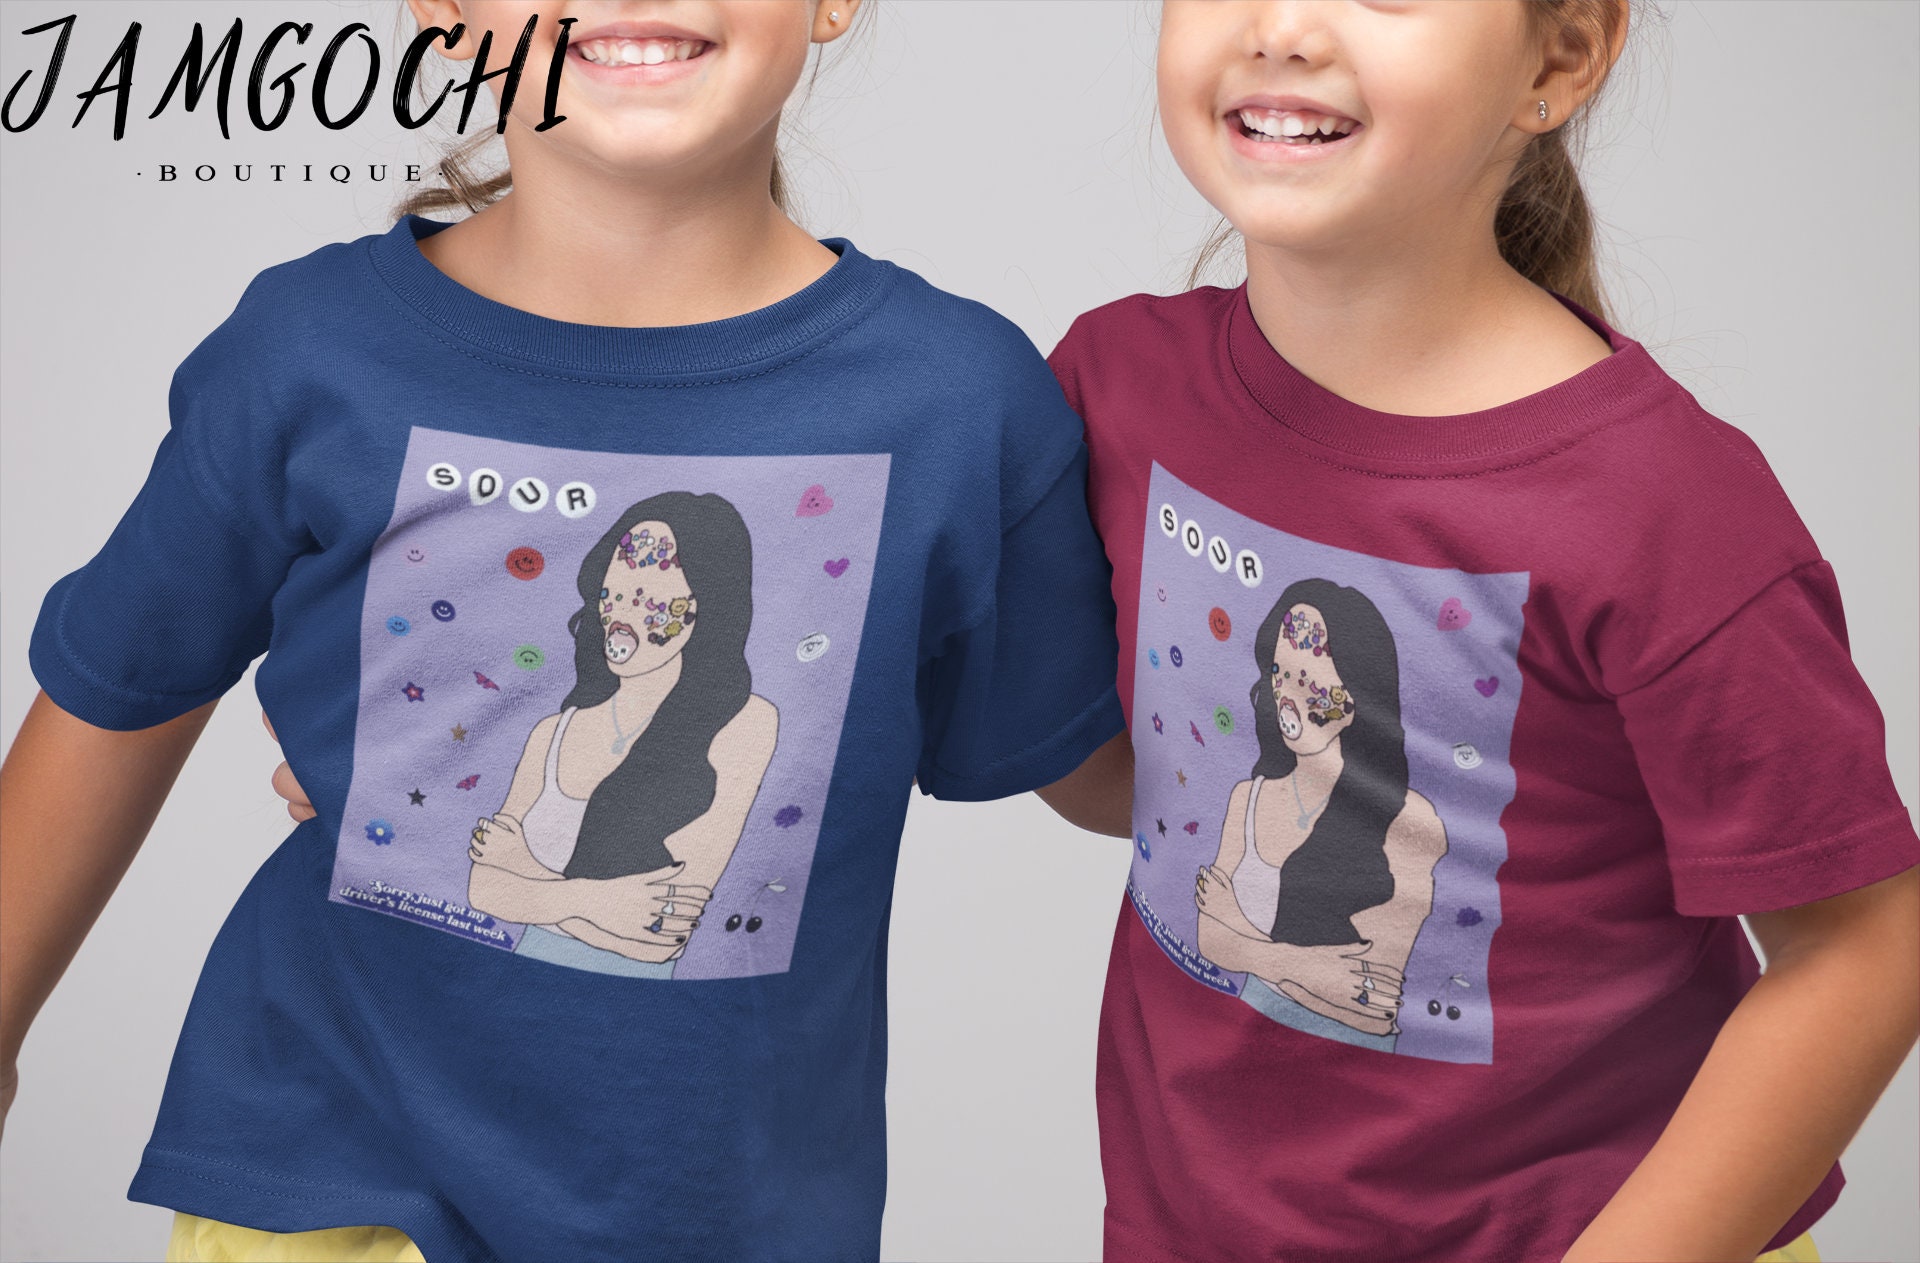 Olivia Rodrigo 2021 Good 4 U Sour Album Merch Drivers License Shirt - Jolly  Family Gifts